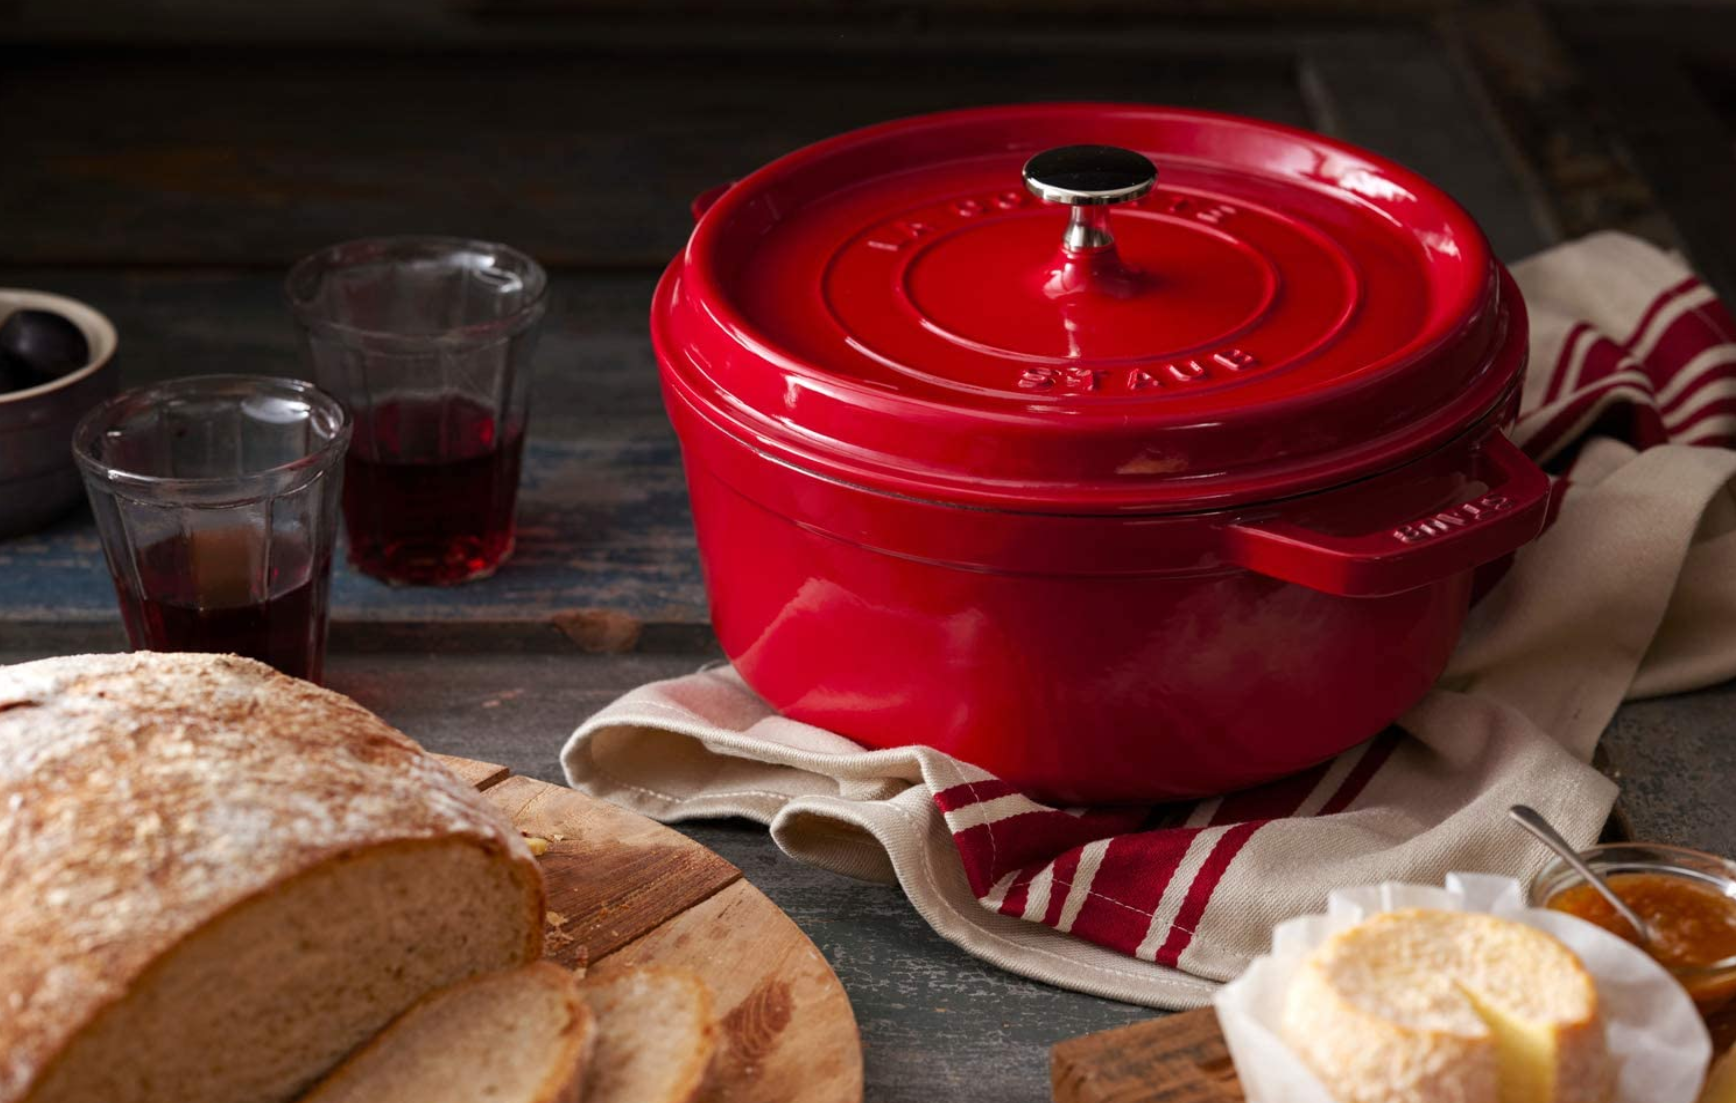 staub-red-cast-iron-pot-4-quarts-have-fasttocollect-kitchen-essentials-2019-5-22-2020-5-22